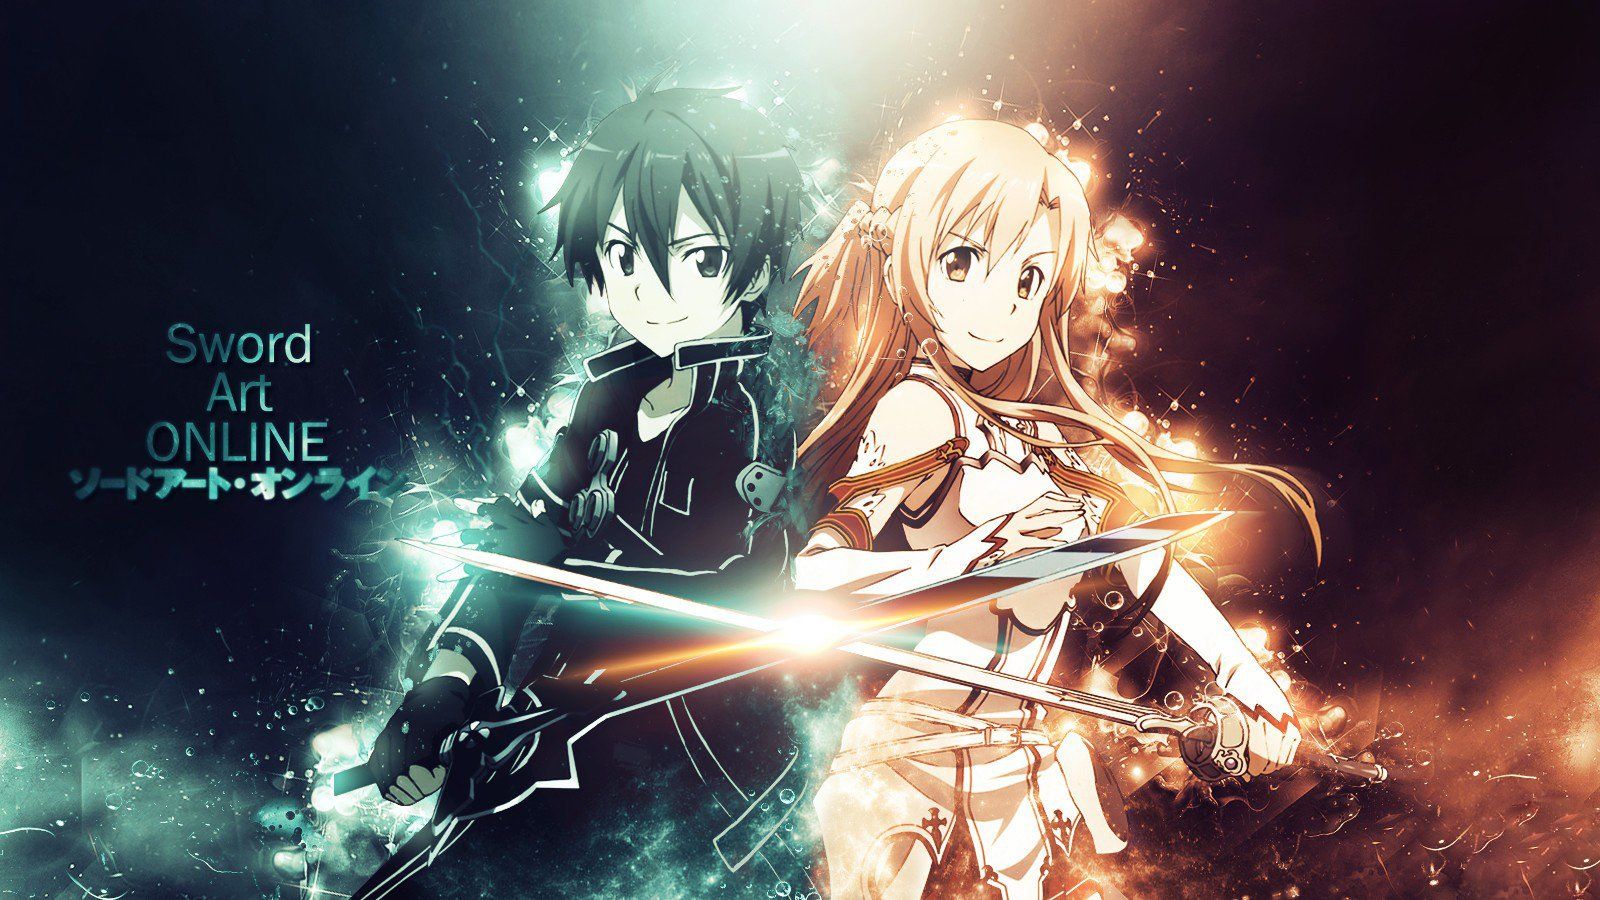 Sword Art Online Progressive Anime Film Releasing in India in February